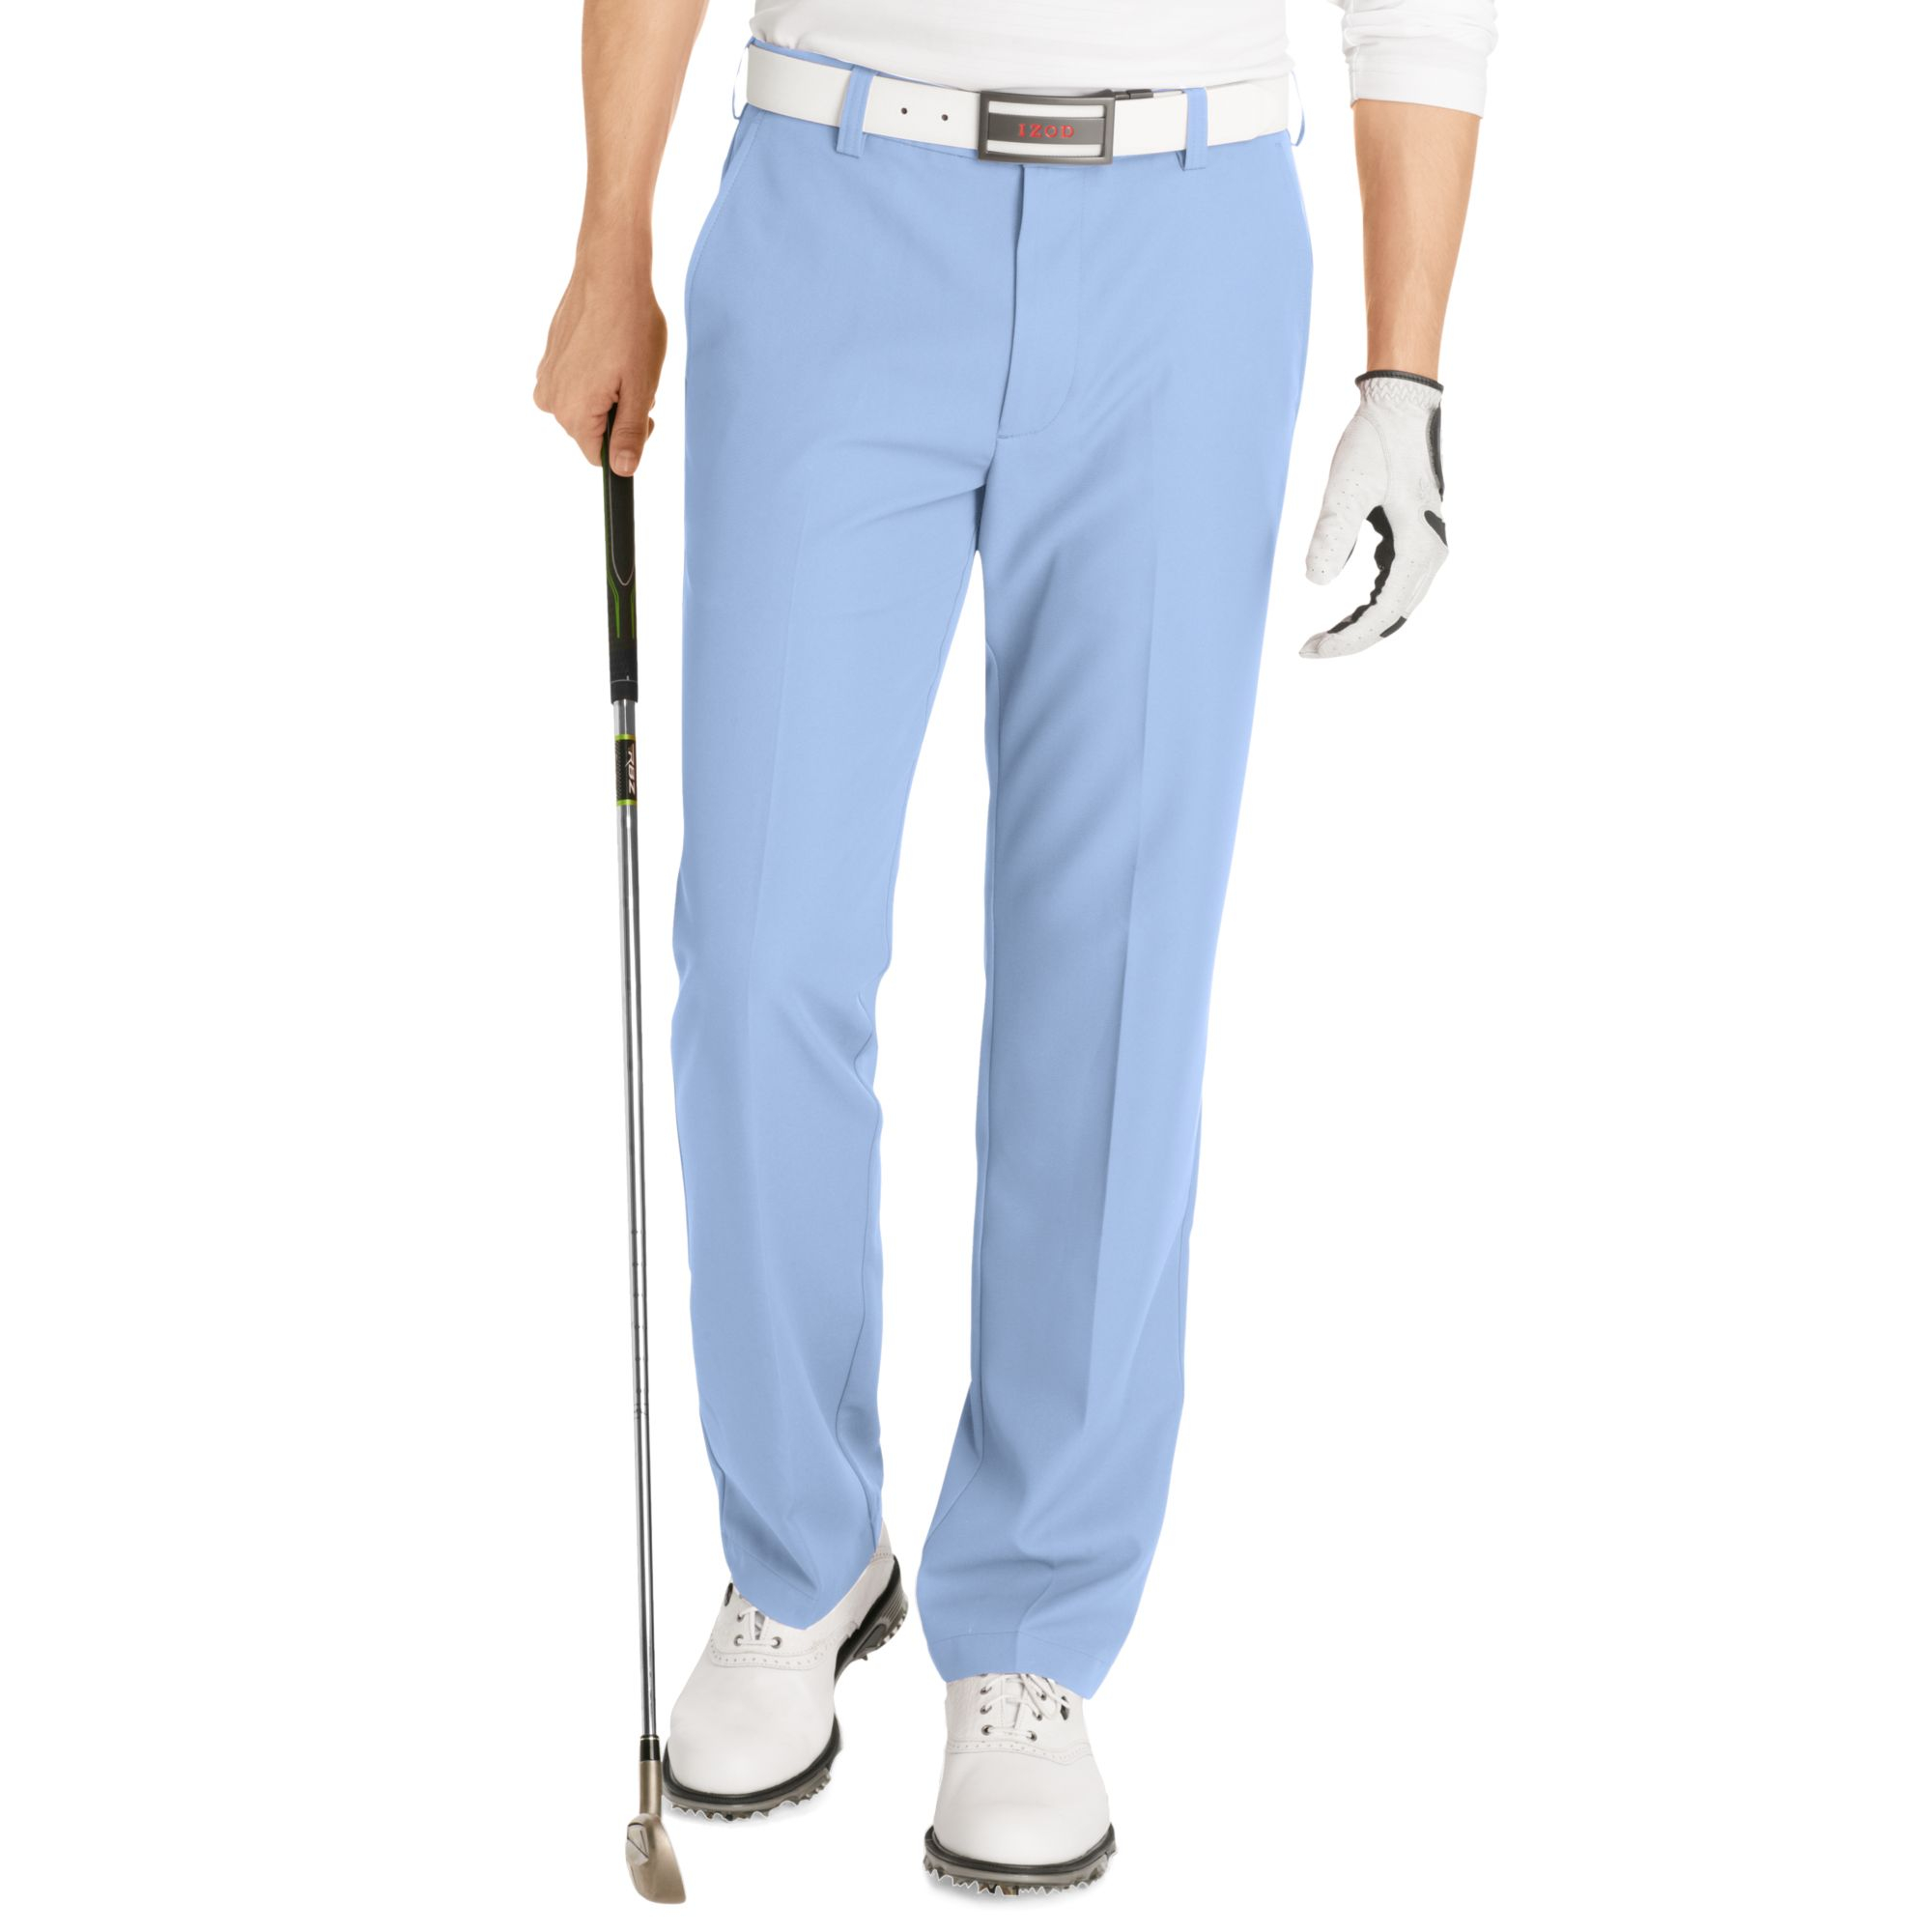 Izod Blue Golf Pants Slim Fit Flat Front Pants Product 1 15800952 0 237521269 Normal 